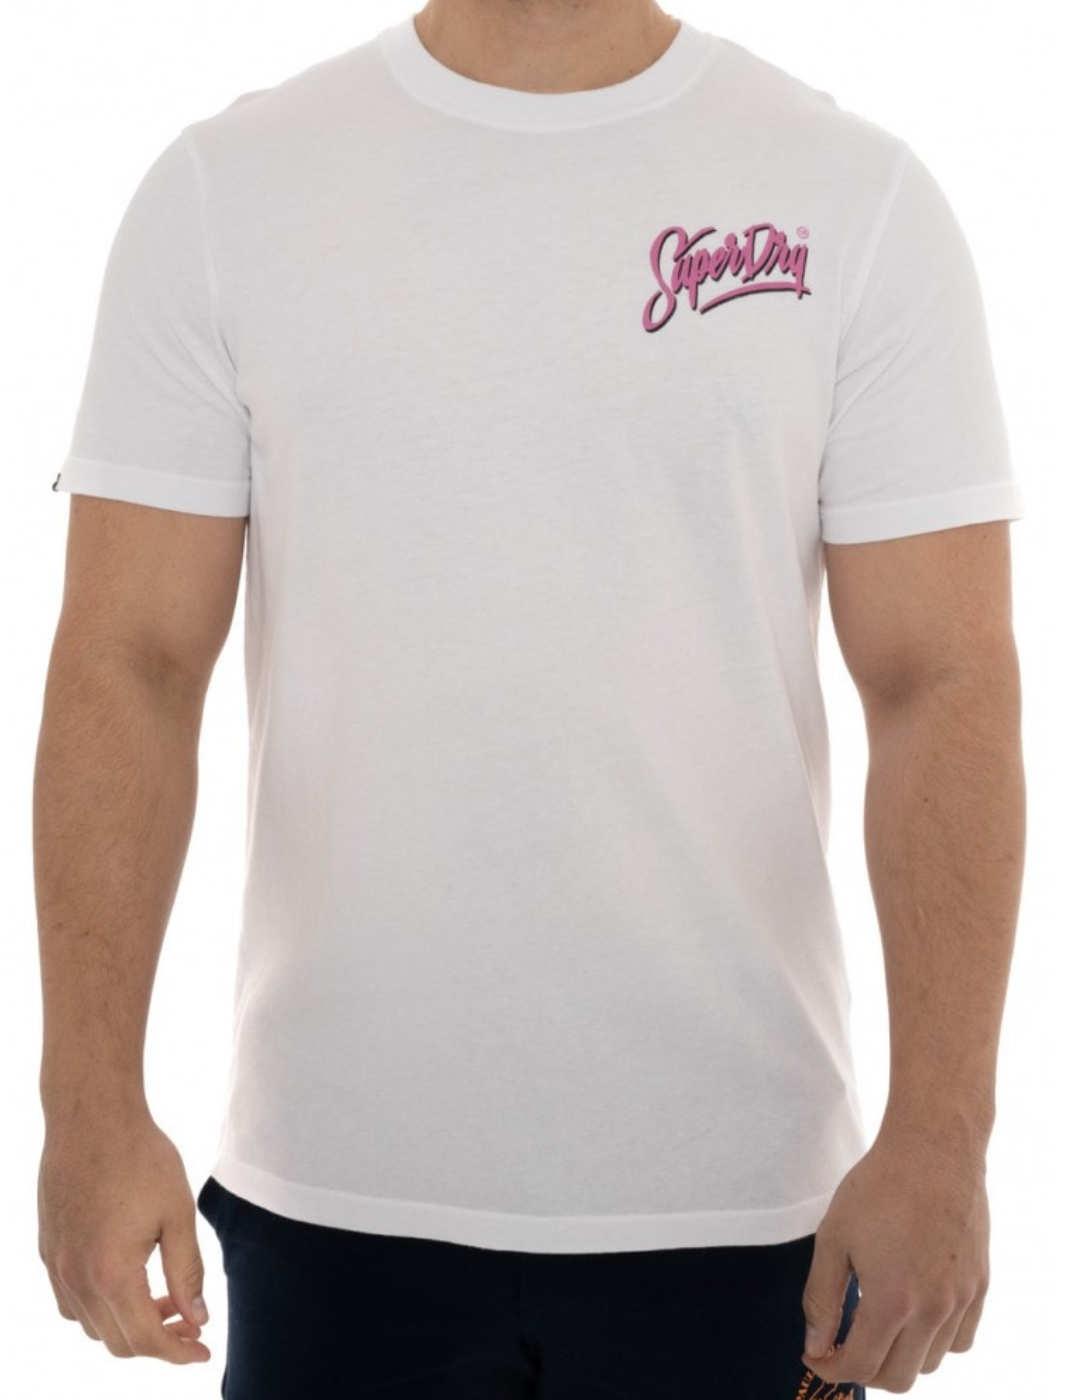 Camiseta Supedry Vintage blanco manga corta para hombre